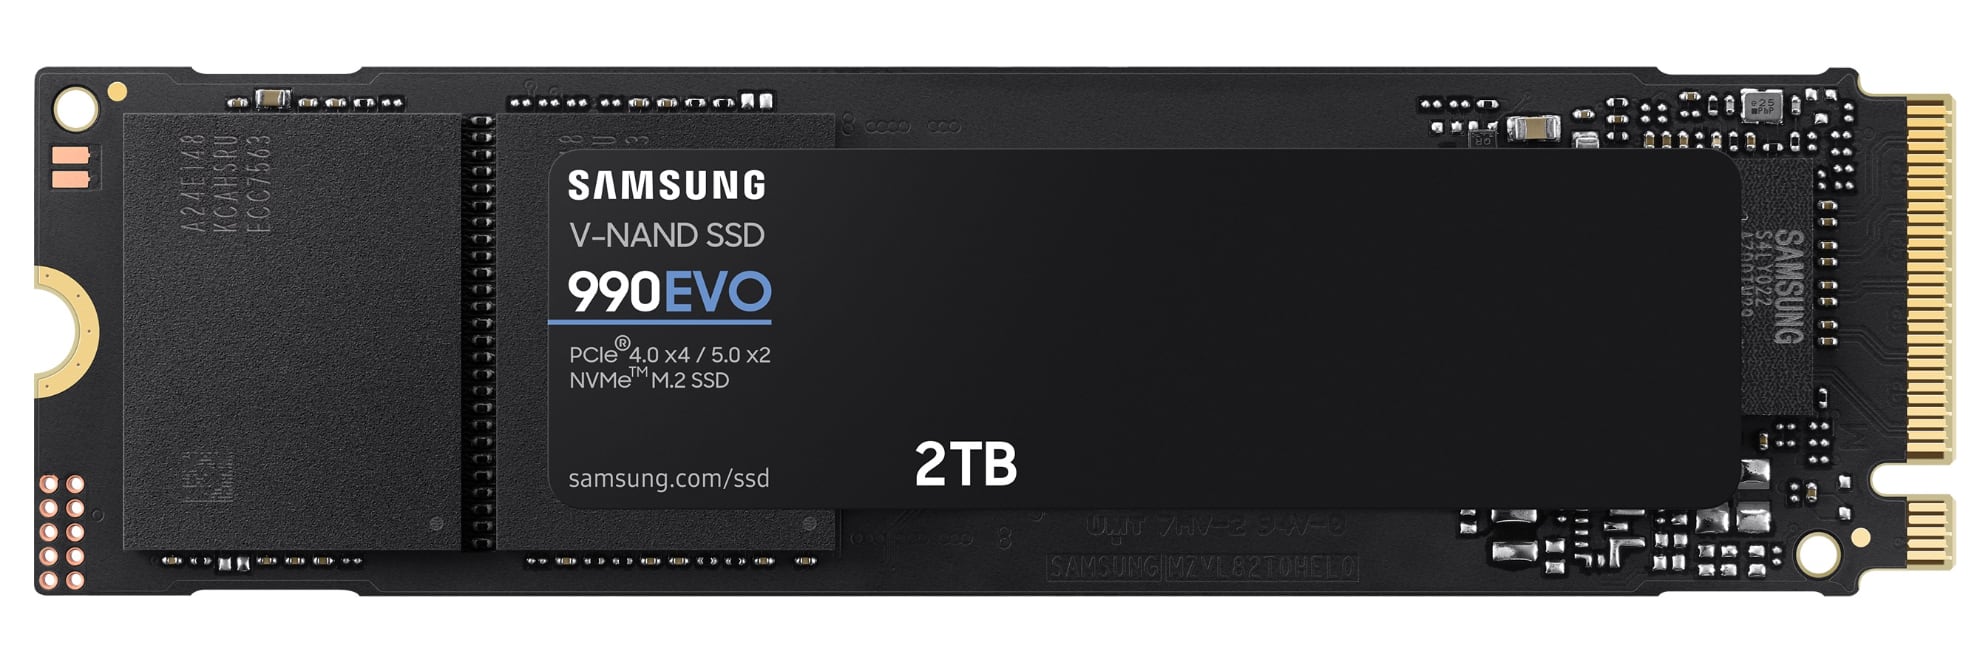 Samsung annonce le SSD haute vitesse 990 EVO, qui coûtera 210 dollars pour 2 To-2